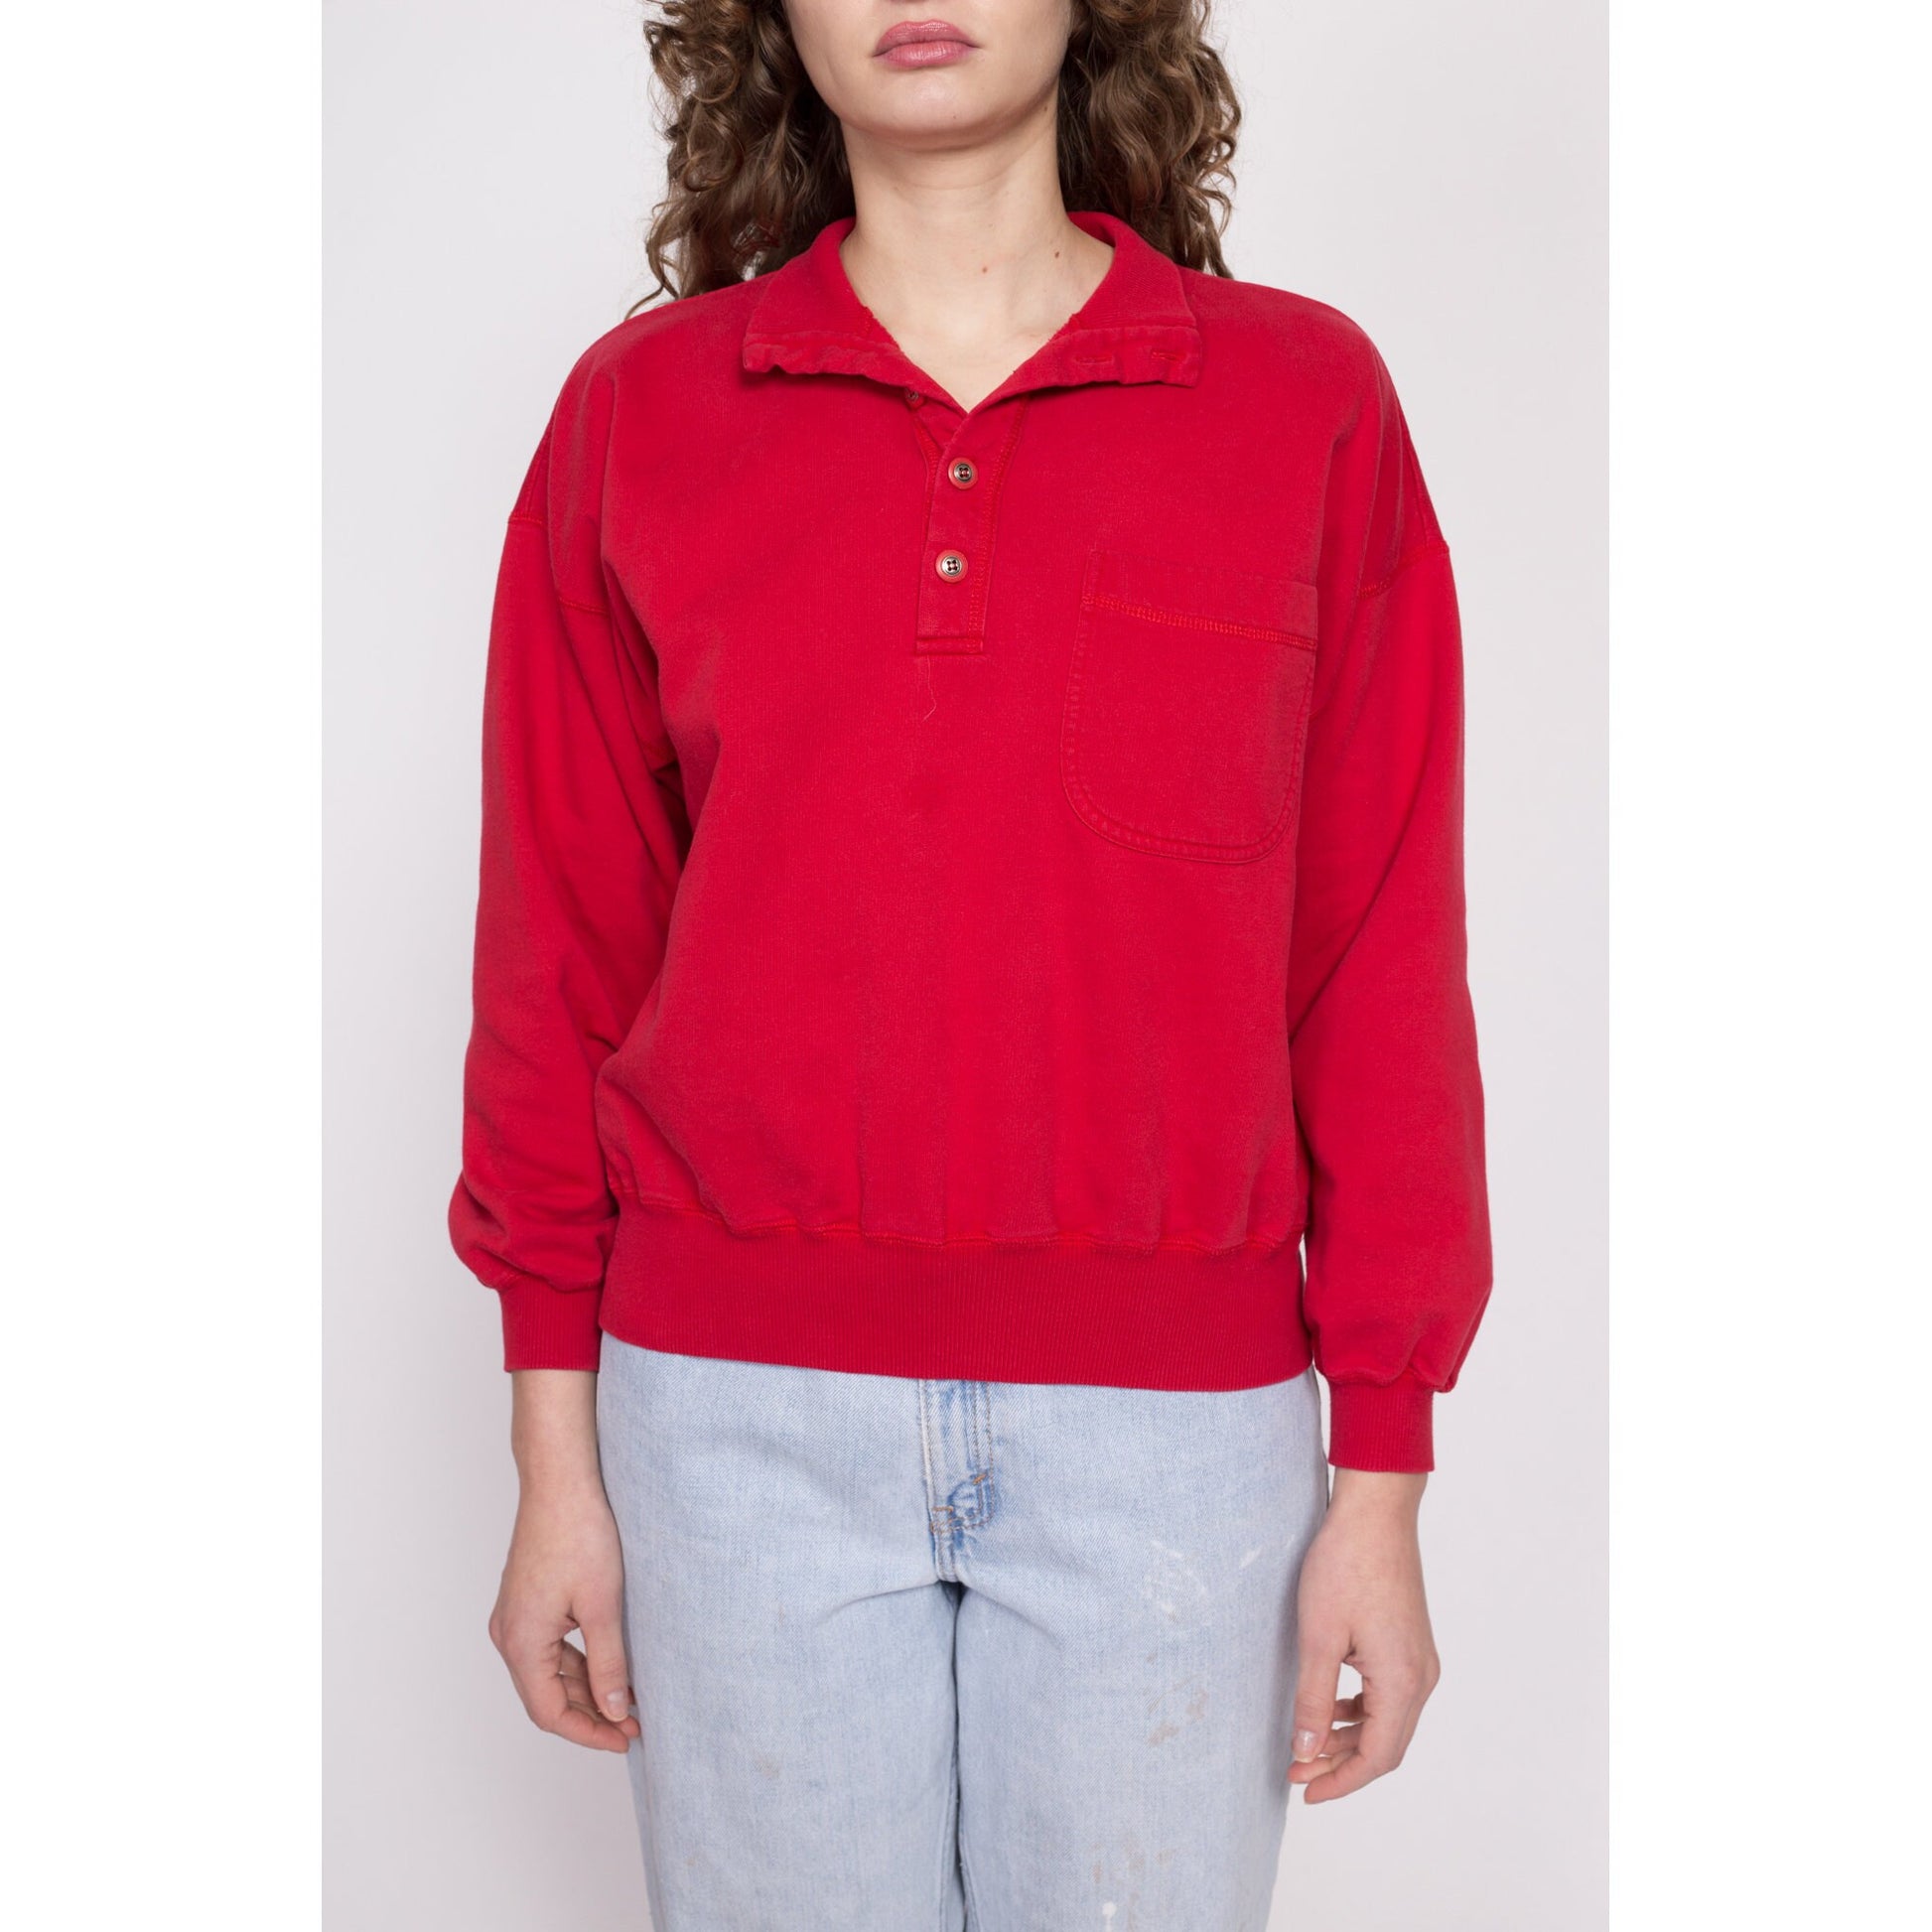 90s Lizwear Red Cropped Collared Sweatshirt - Medium